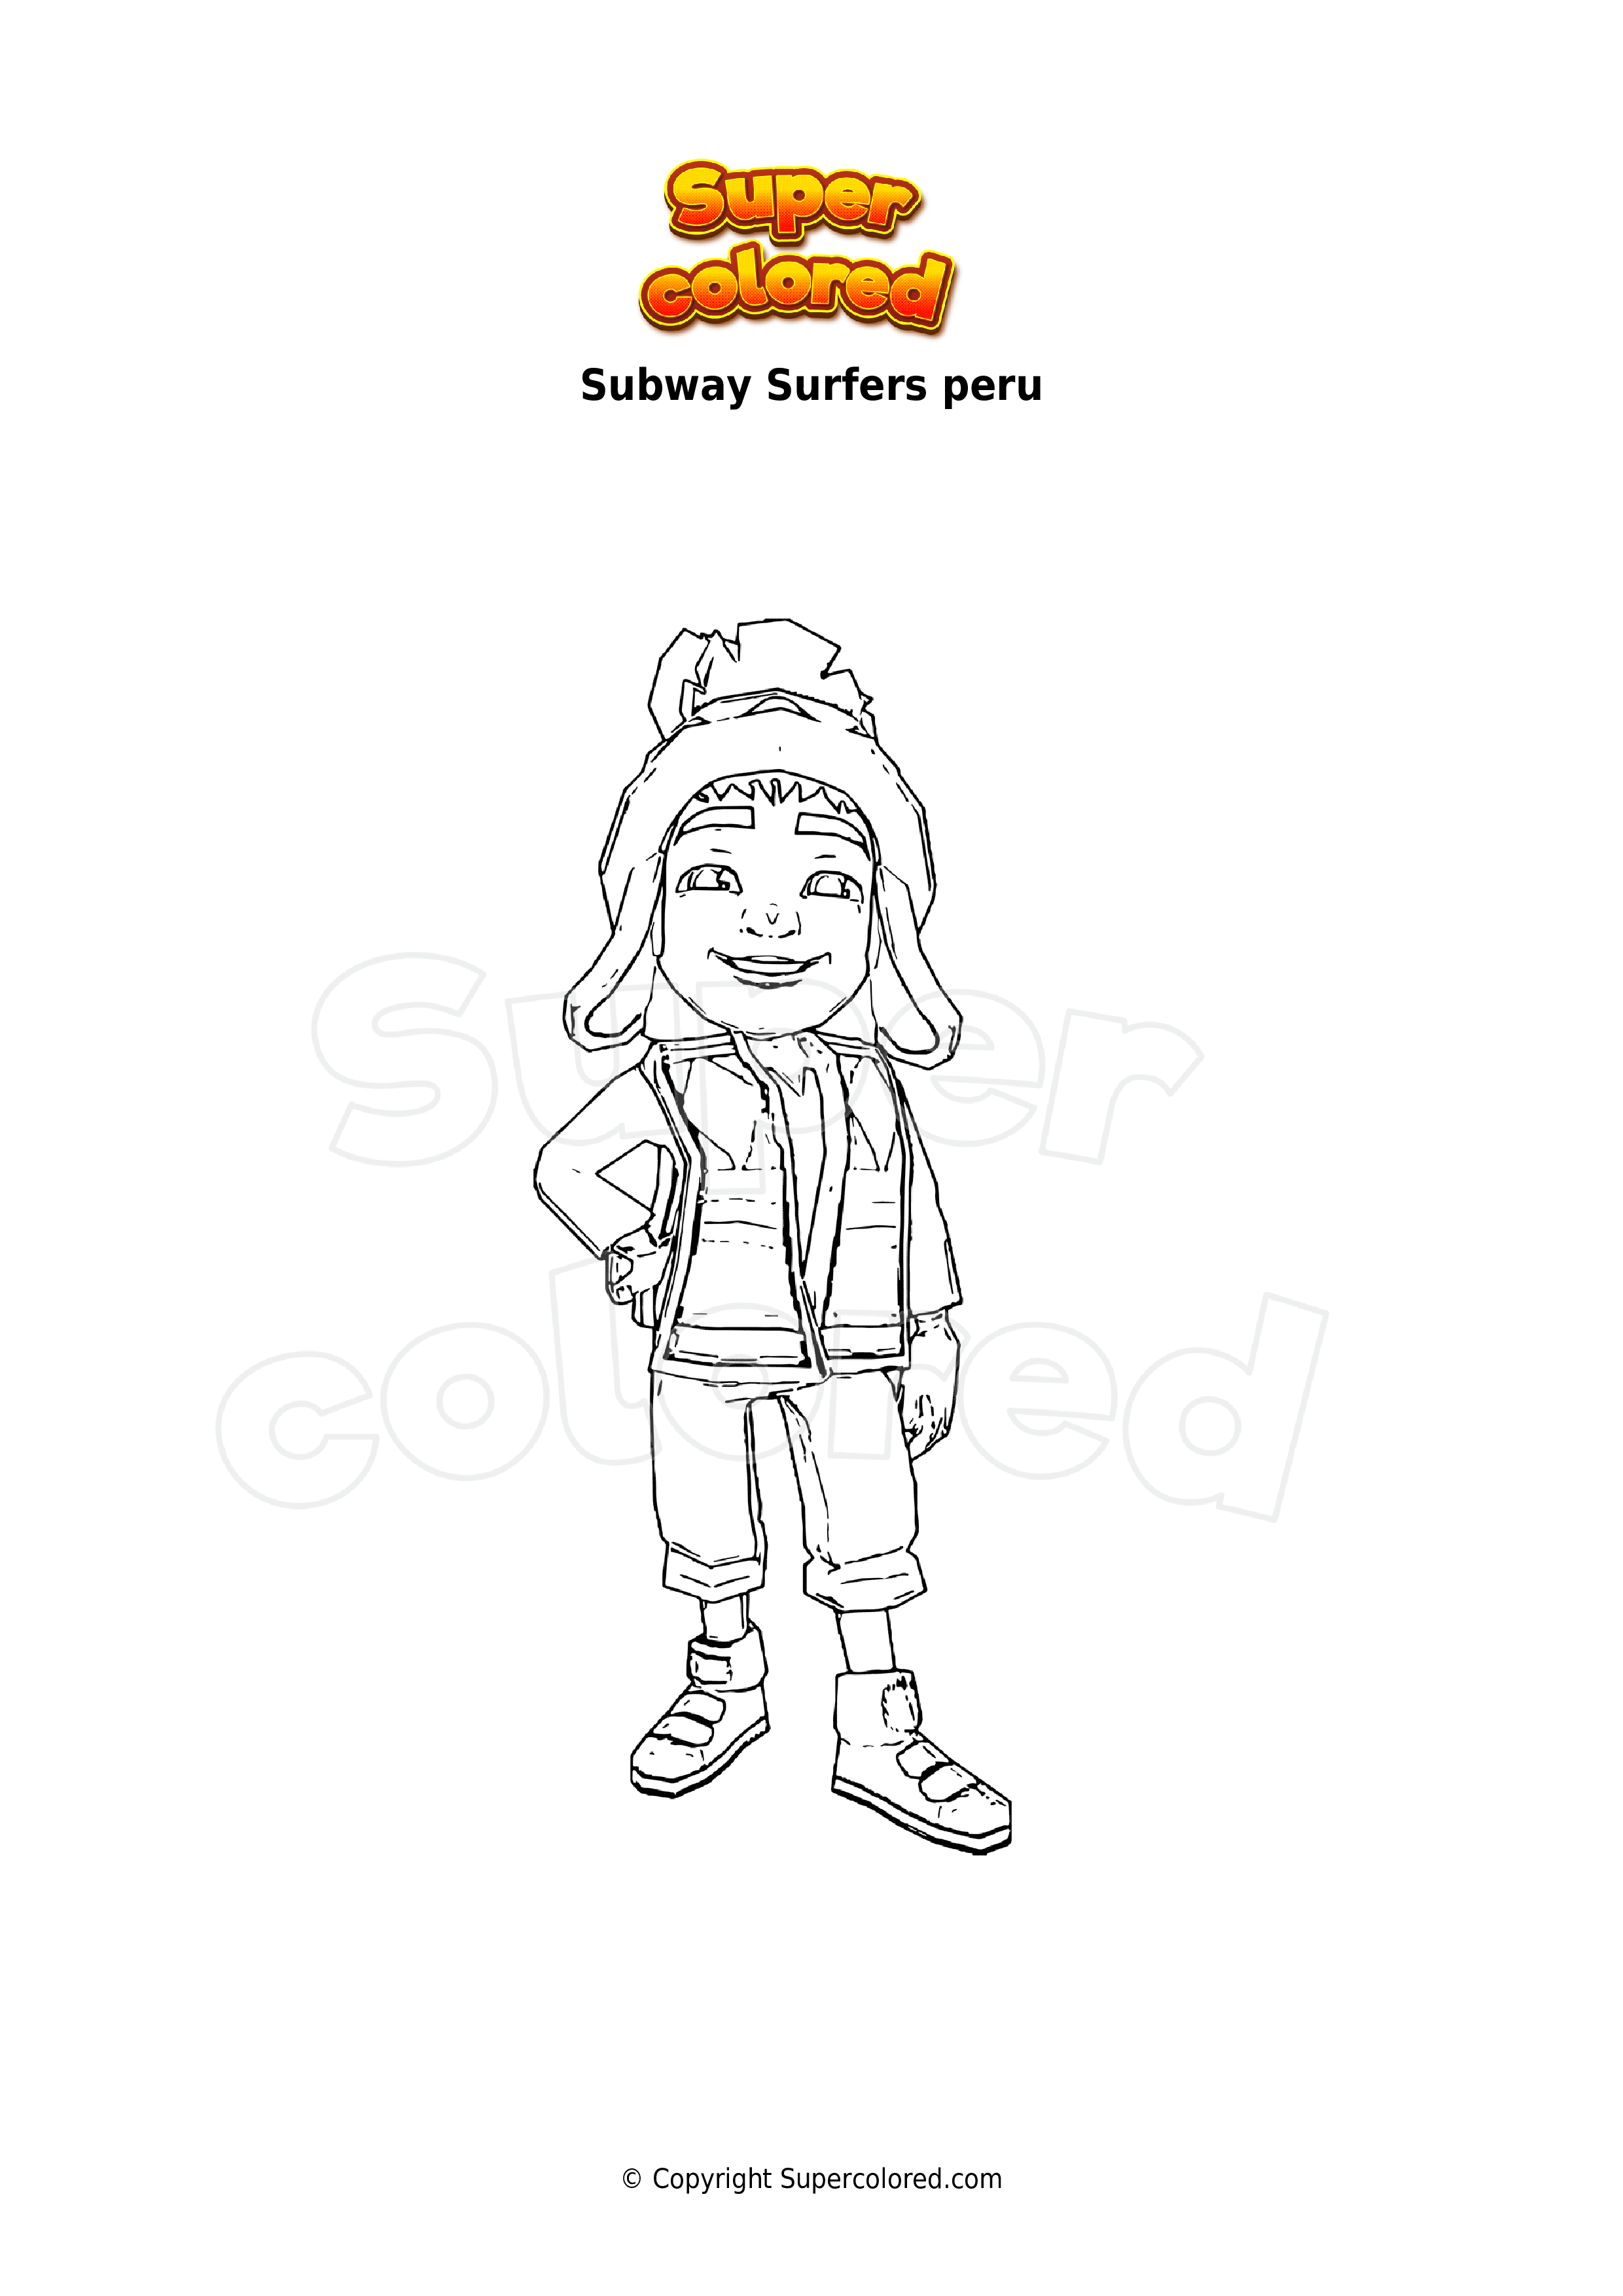 Subway surfers peru